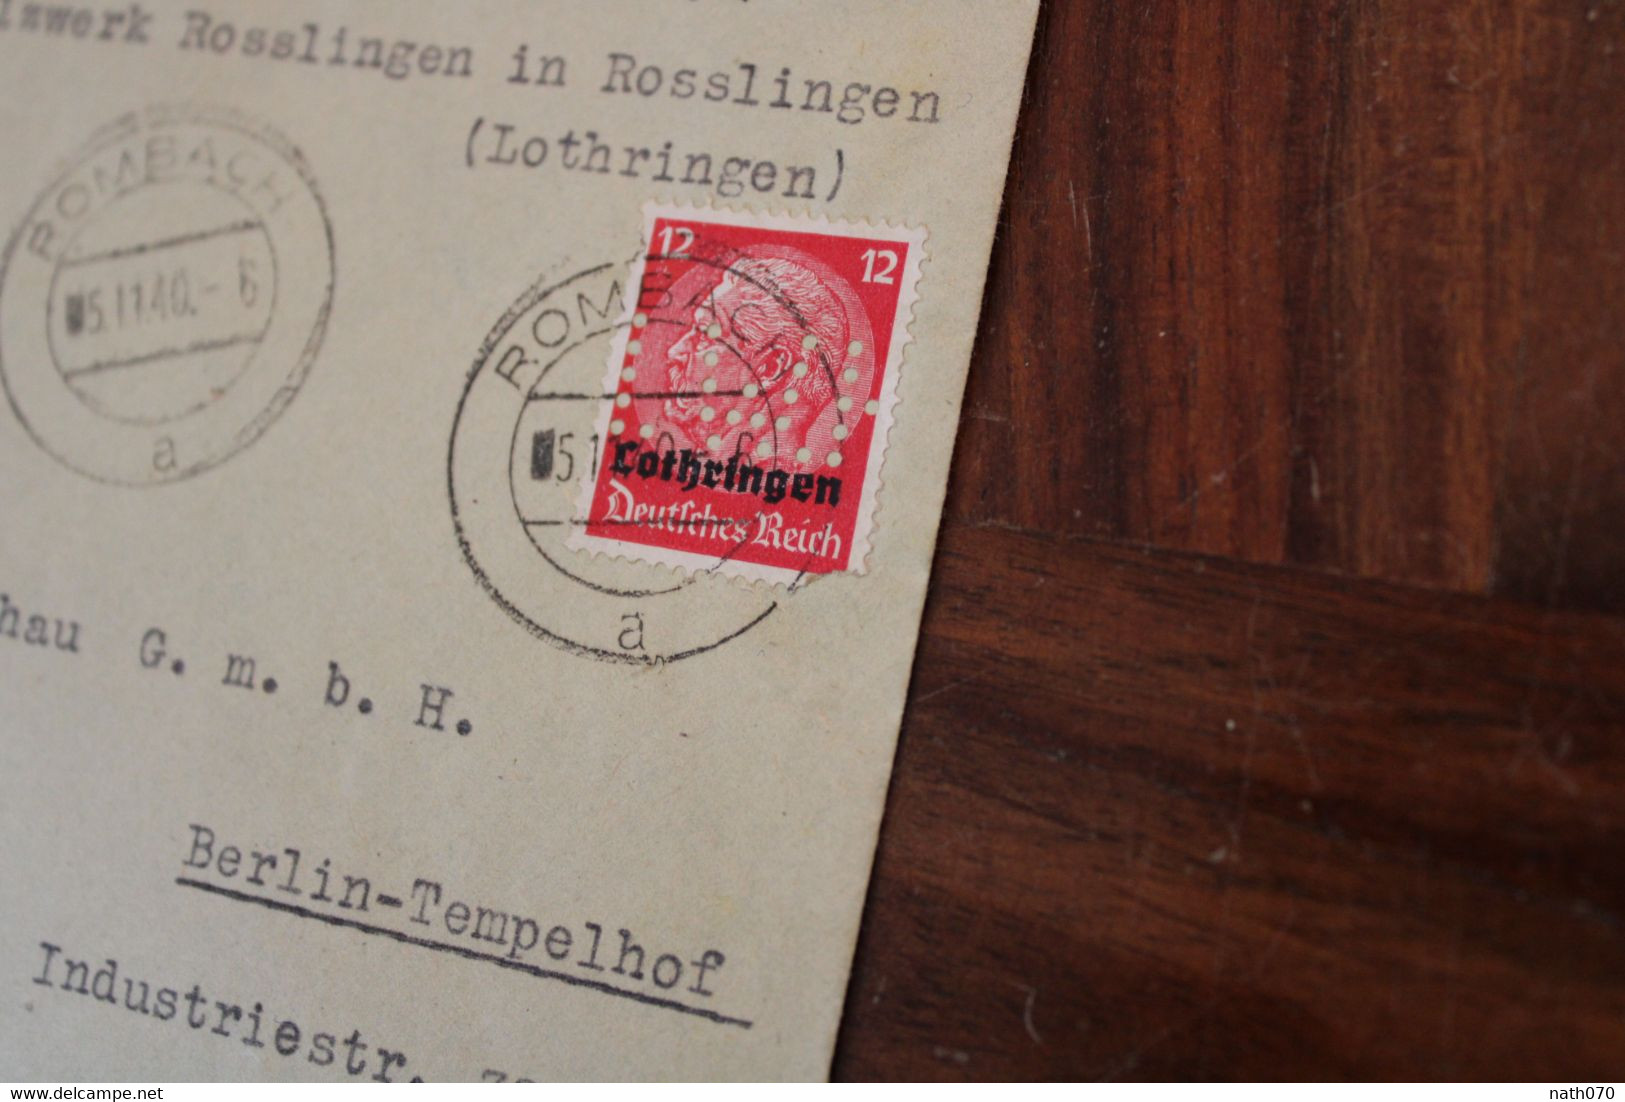 Löthringen 1940 Rosslingen Perfin Stamp Cover Dt Reich Besetzung Occupation Lorraine Timbre Perforé Rosselange Rombach - Covers & Documents